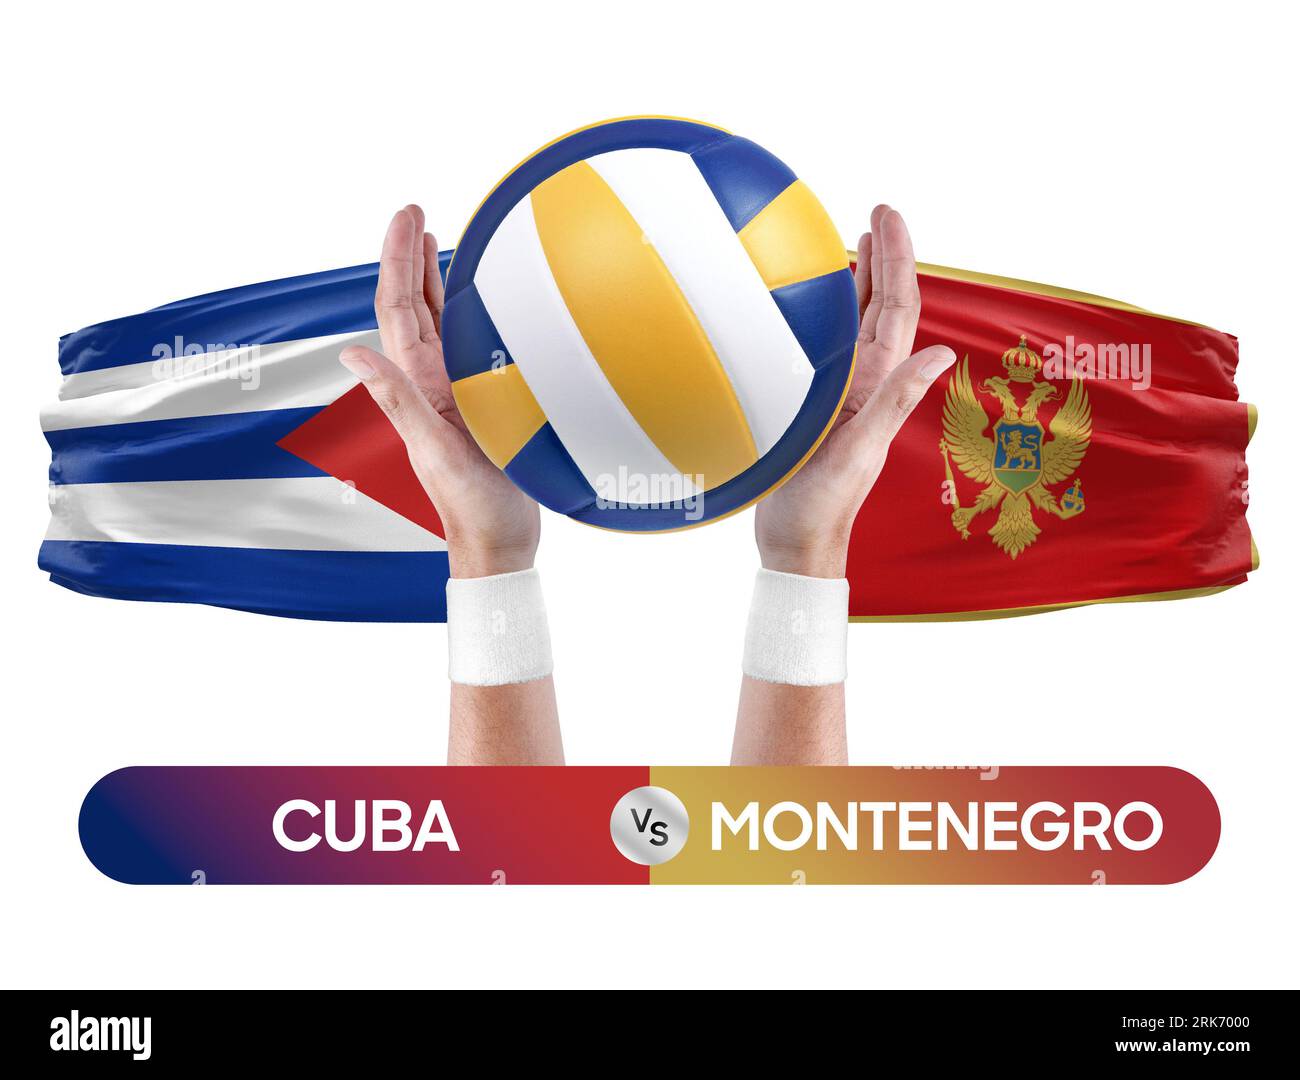 Montenegro vs cuba Cut Out Stock Images & Pictures - Alamy